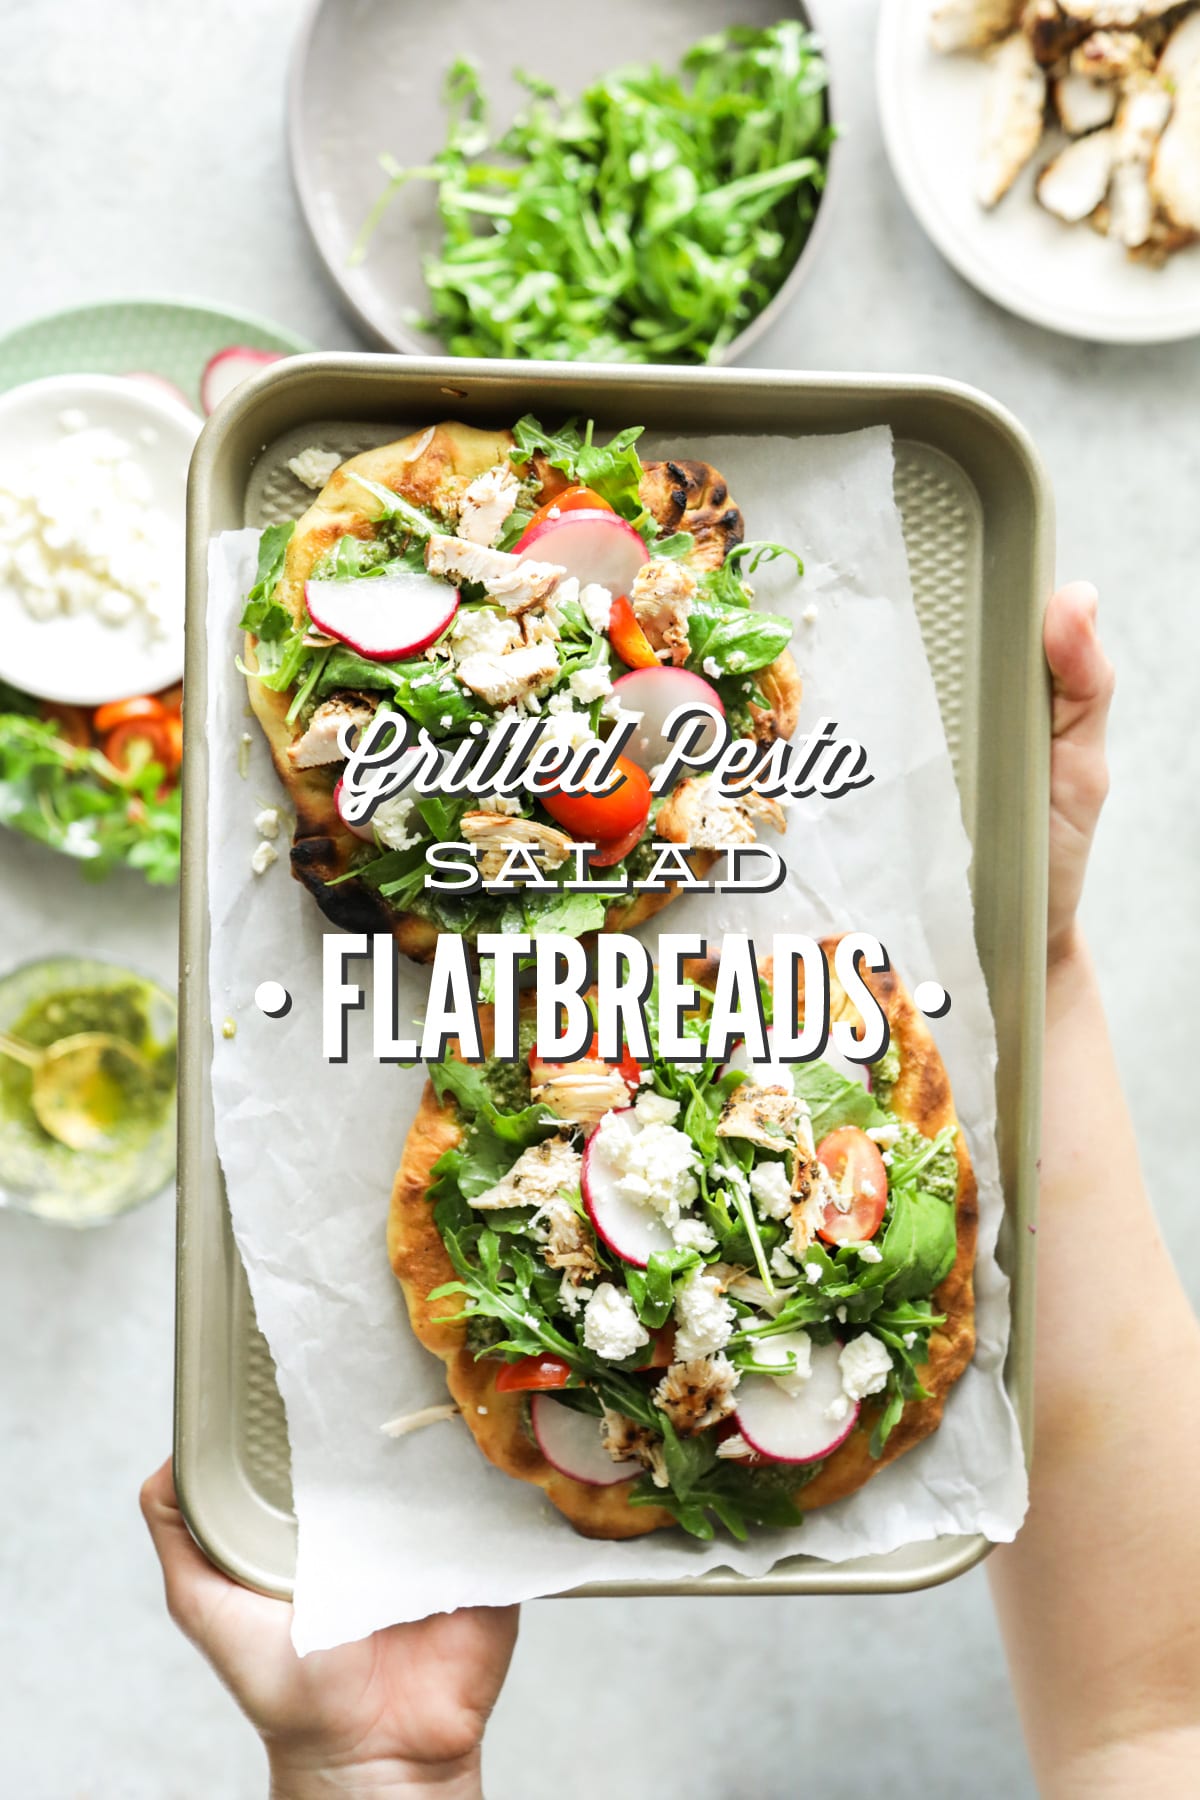 Grilled Pesto Salad Flatbreads